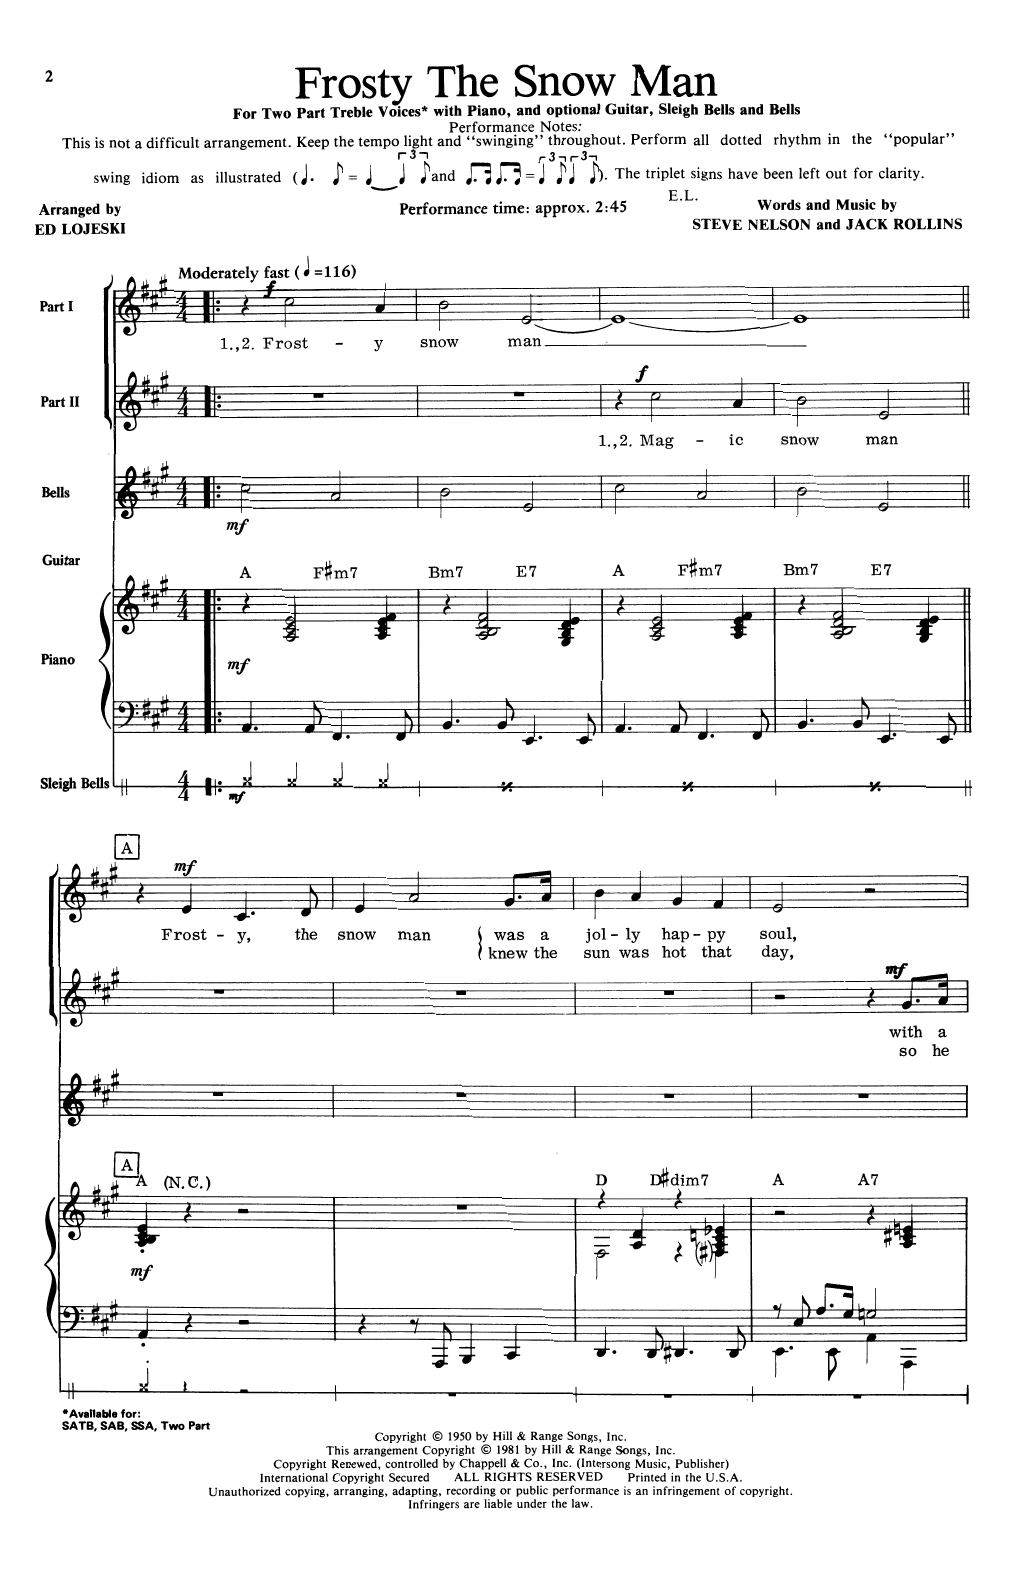 Jack Rollins & Steve Nelson Frosty The Snow Man (arr. Ed Lojeski) Sheet Music Notes & Chords for 2-Part Choir - Download or Print PDF